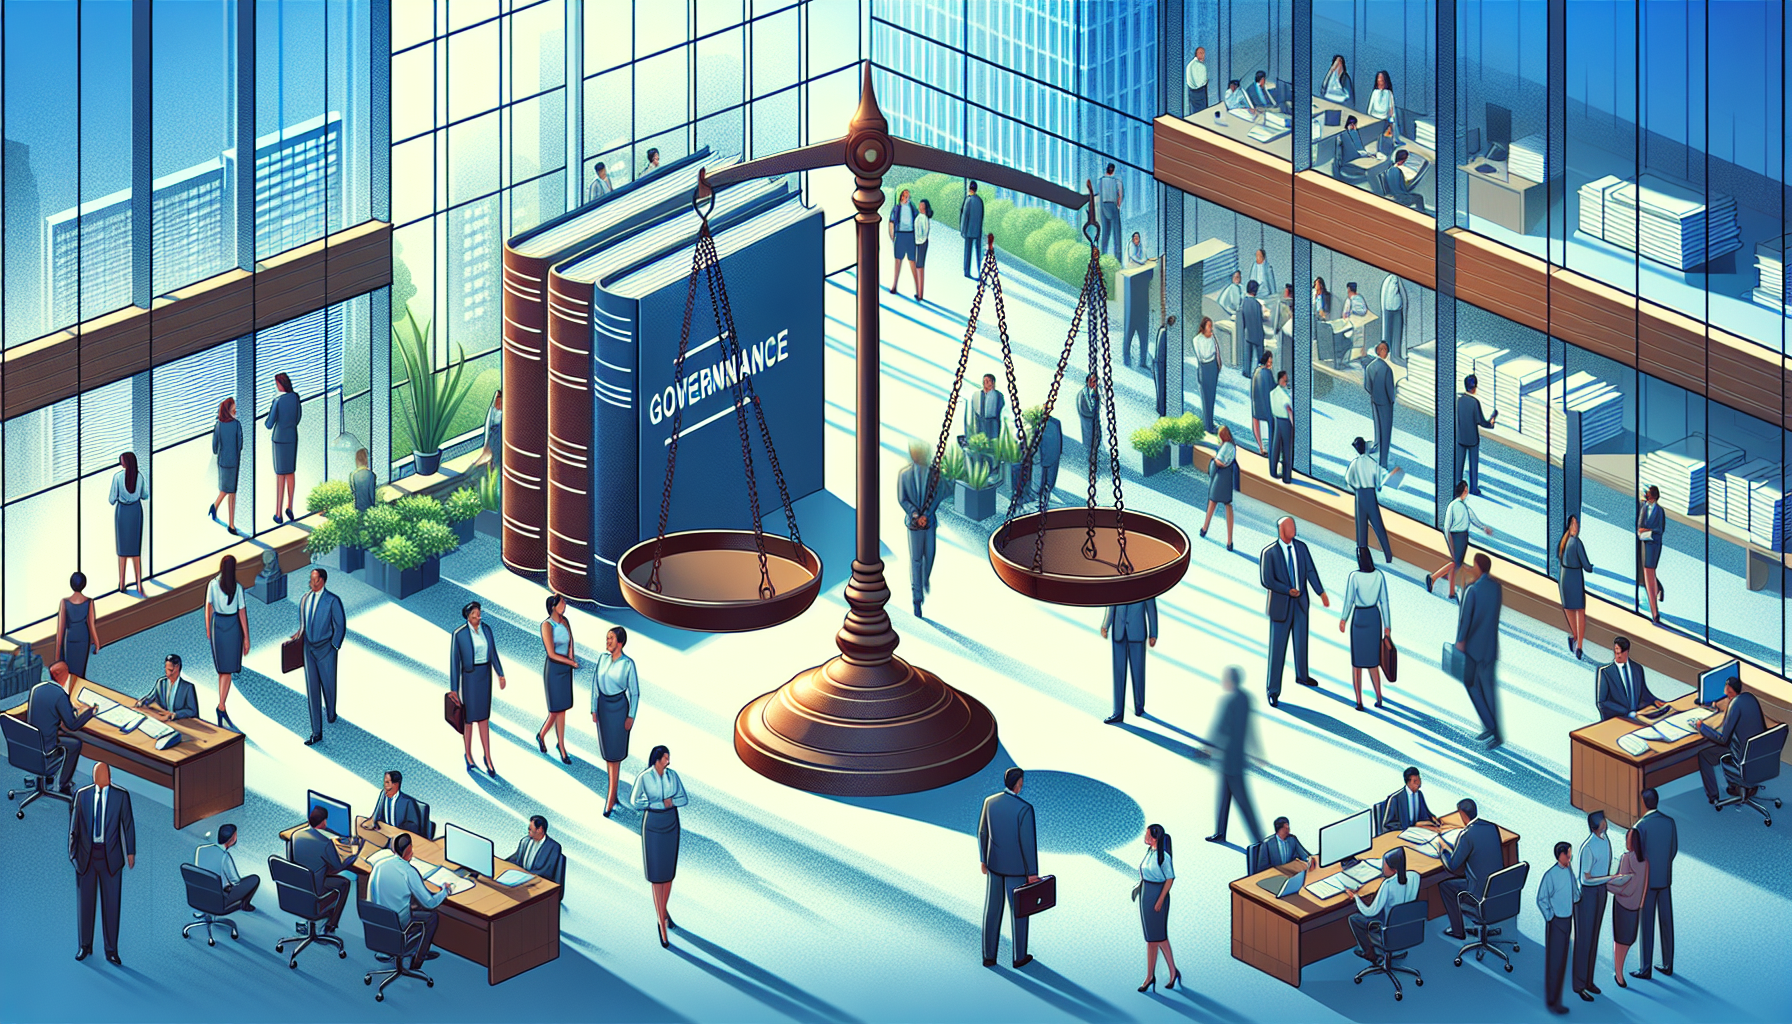 Illustration of corporate governance principles